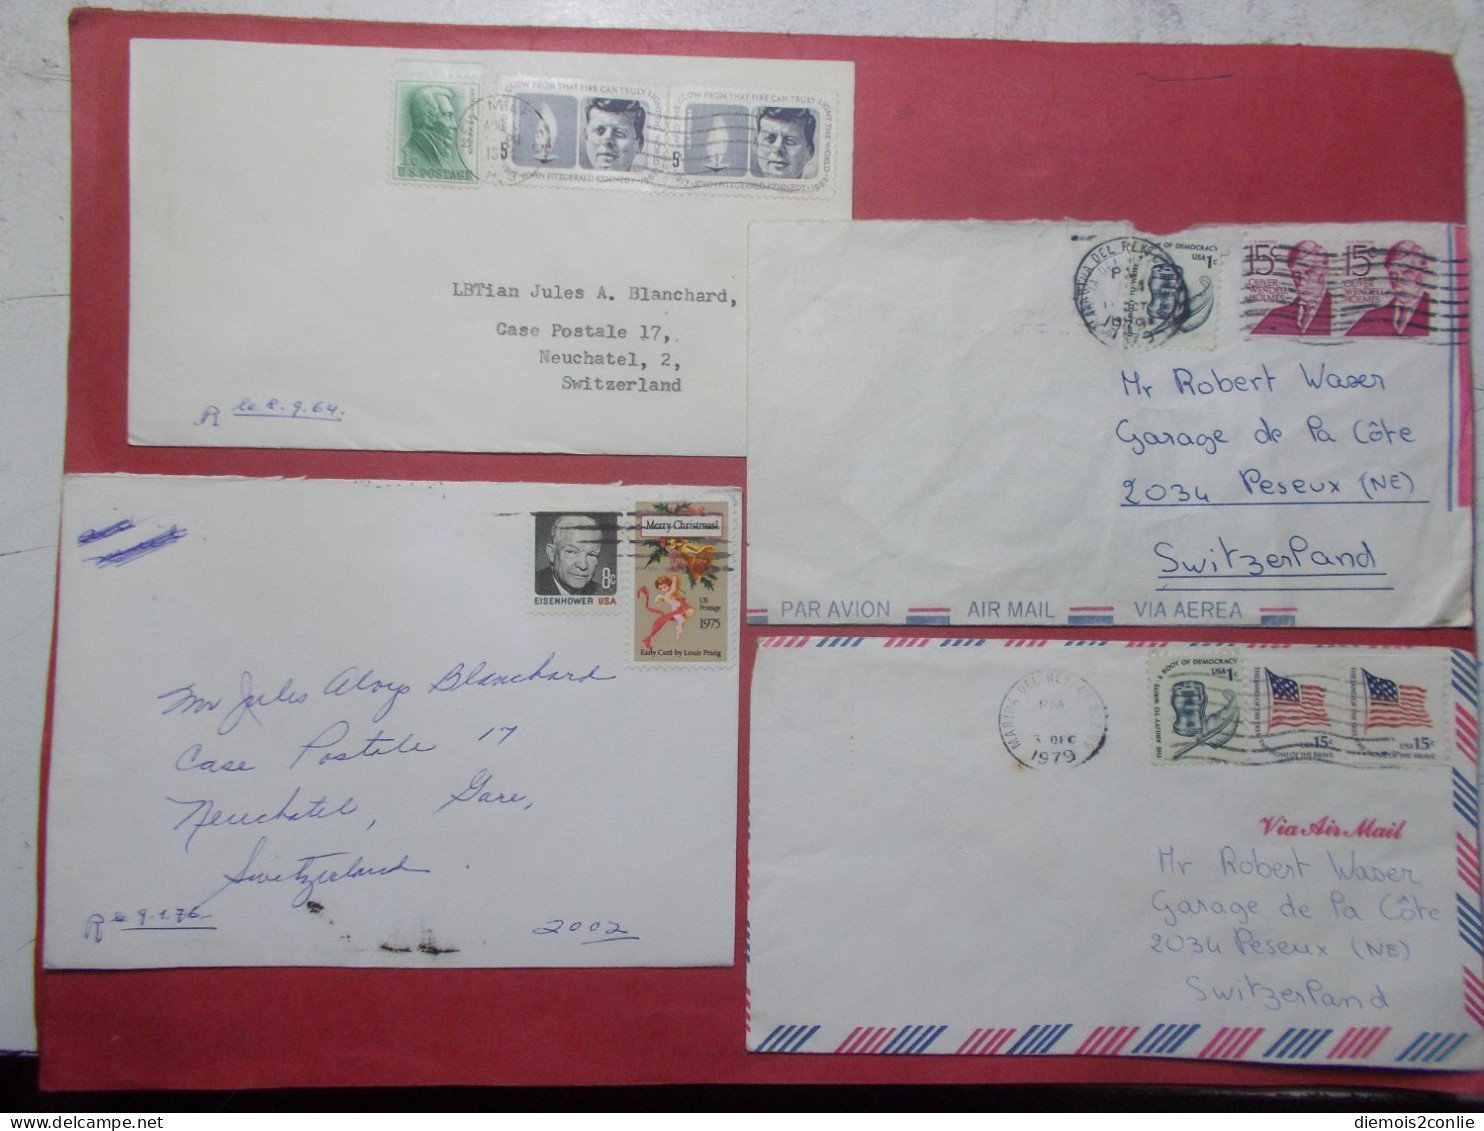 Marcophilie - Lot 4 Lettres Enveloppes Oblitérations Timbres USA Destination SUISSE (B332) - Postal History